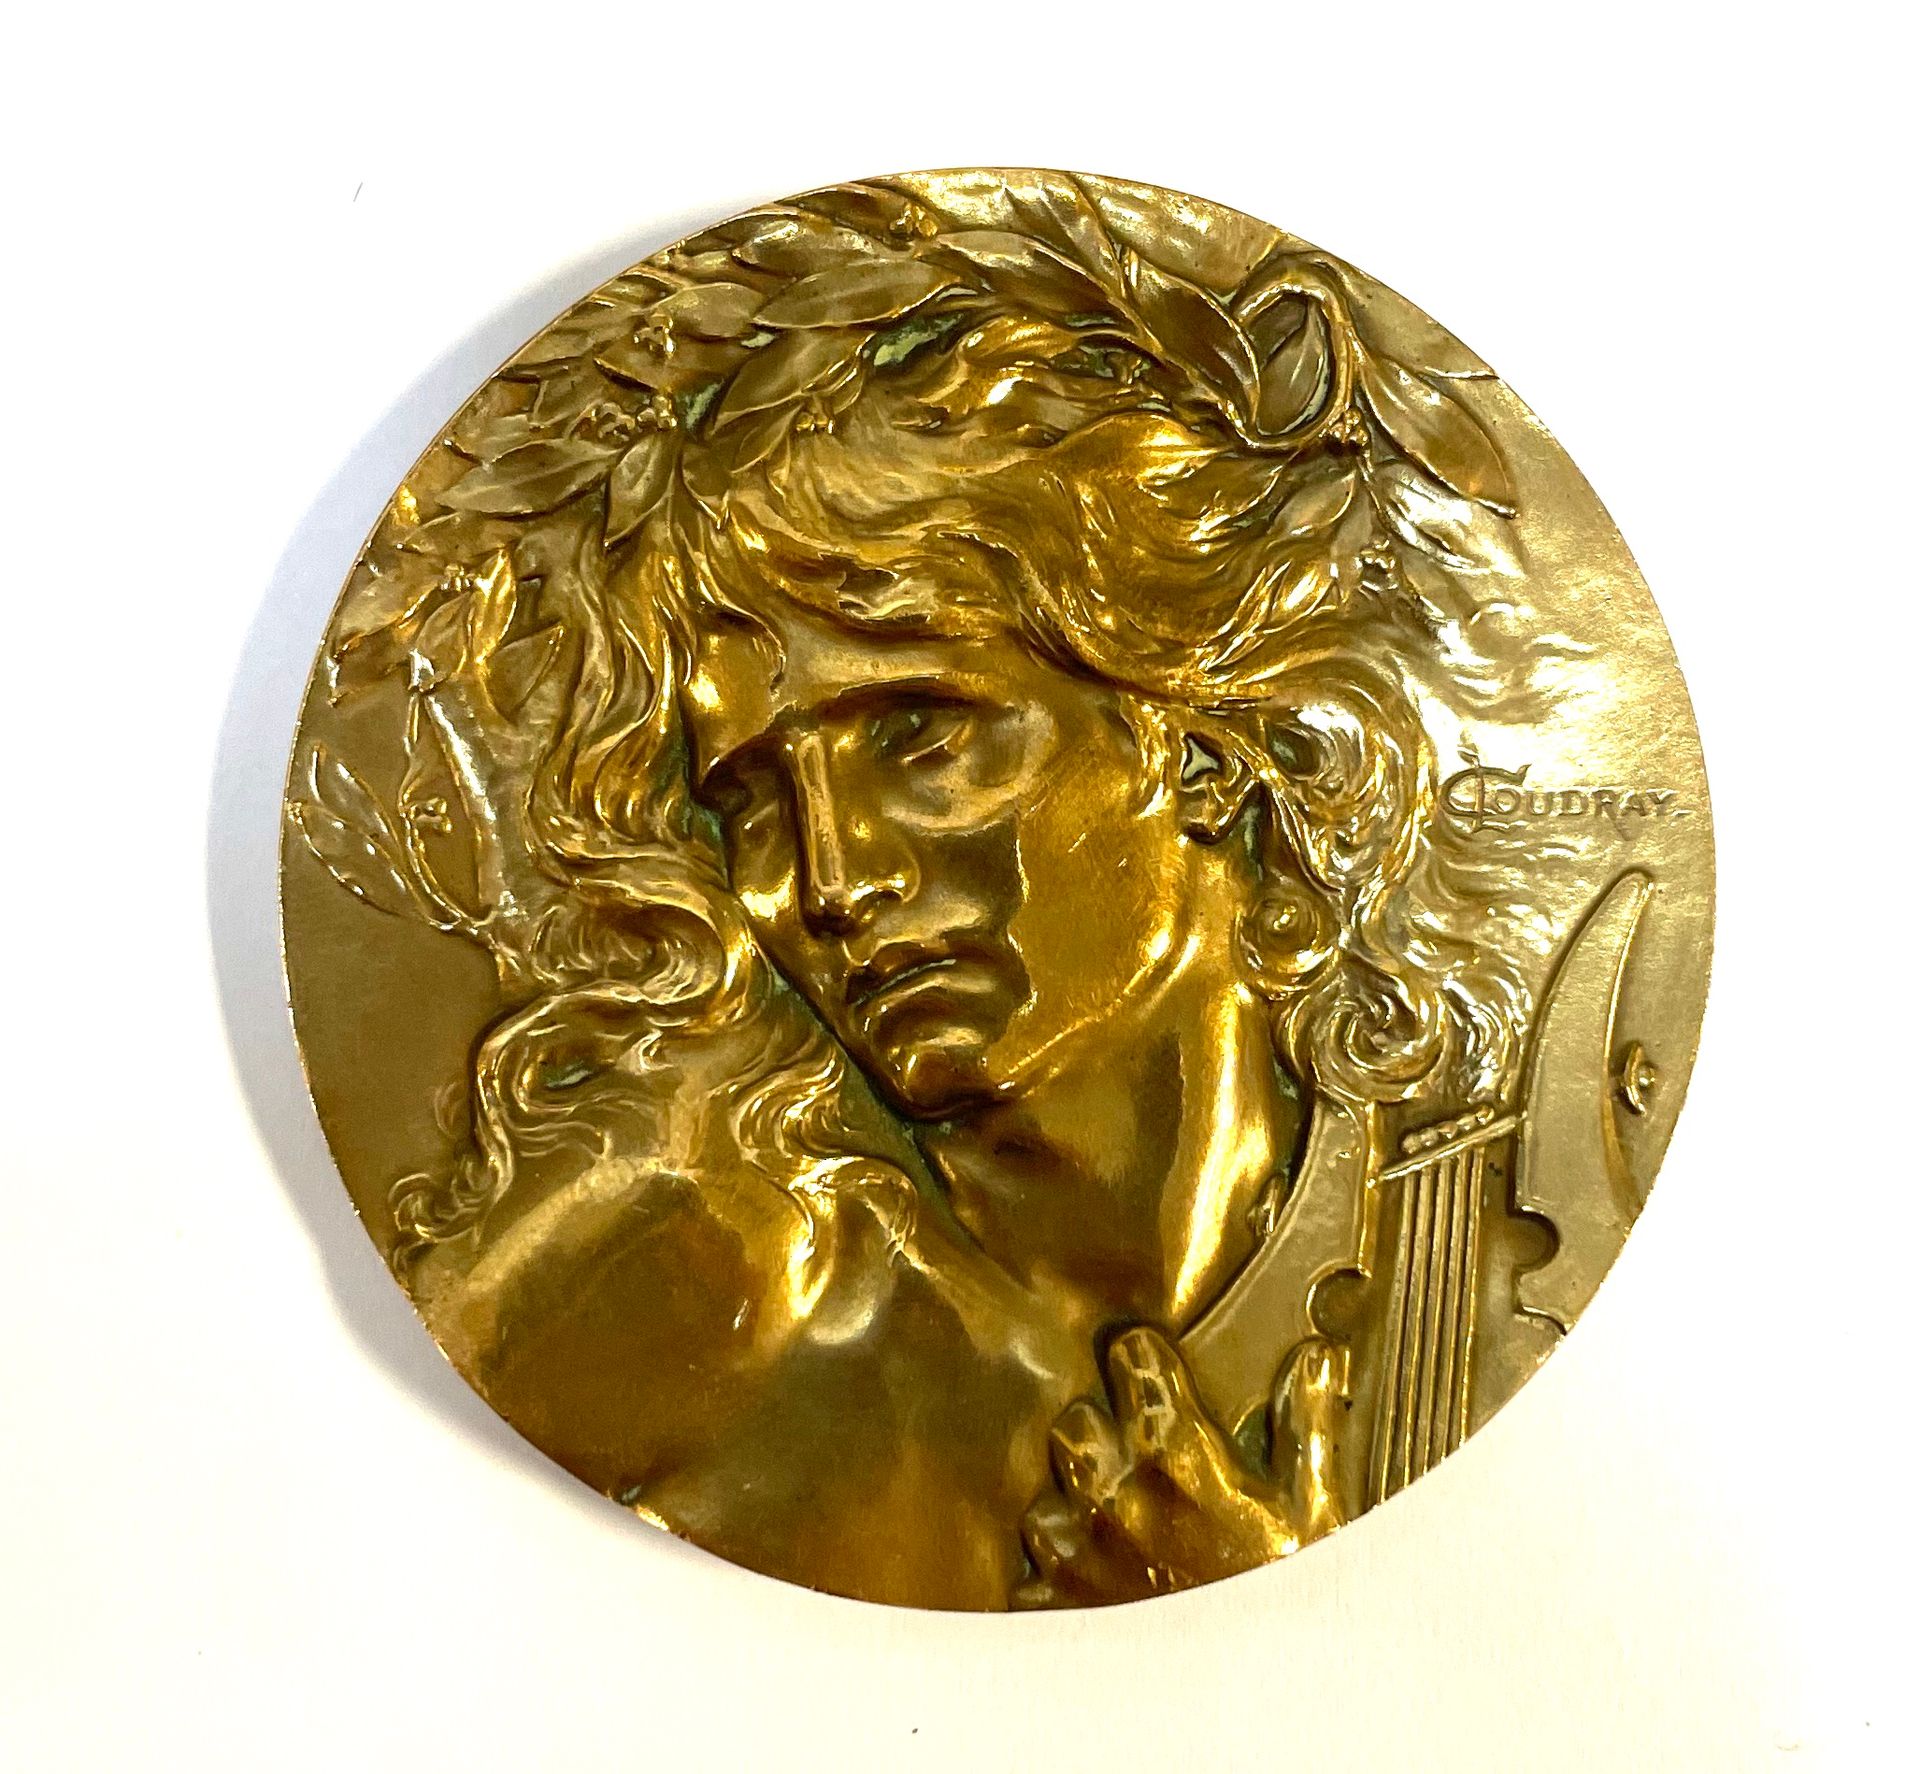 Null 奖章 - 法国

一块桌牌，署名Cloudray，铜质

答：奥菲斯紧握着他的琴声

R: 一个有翅膀的天使，右手拿着羽毛，左手拿着小号